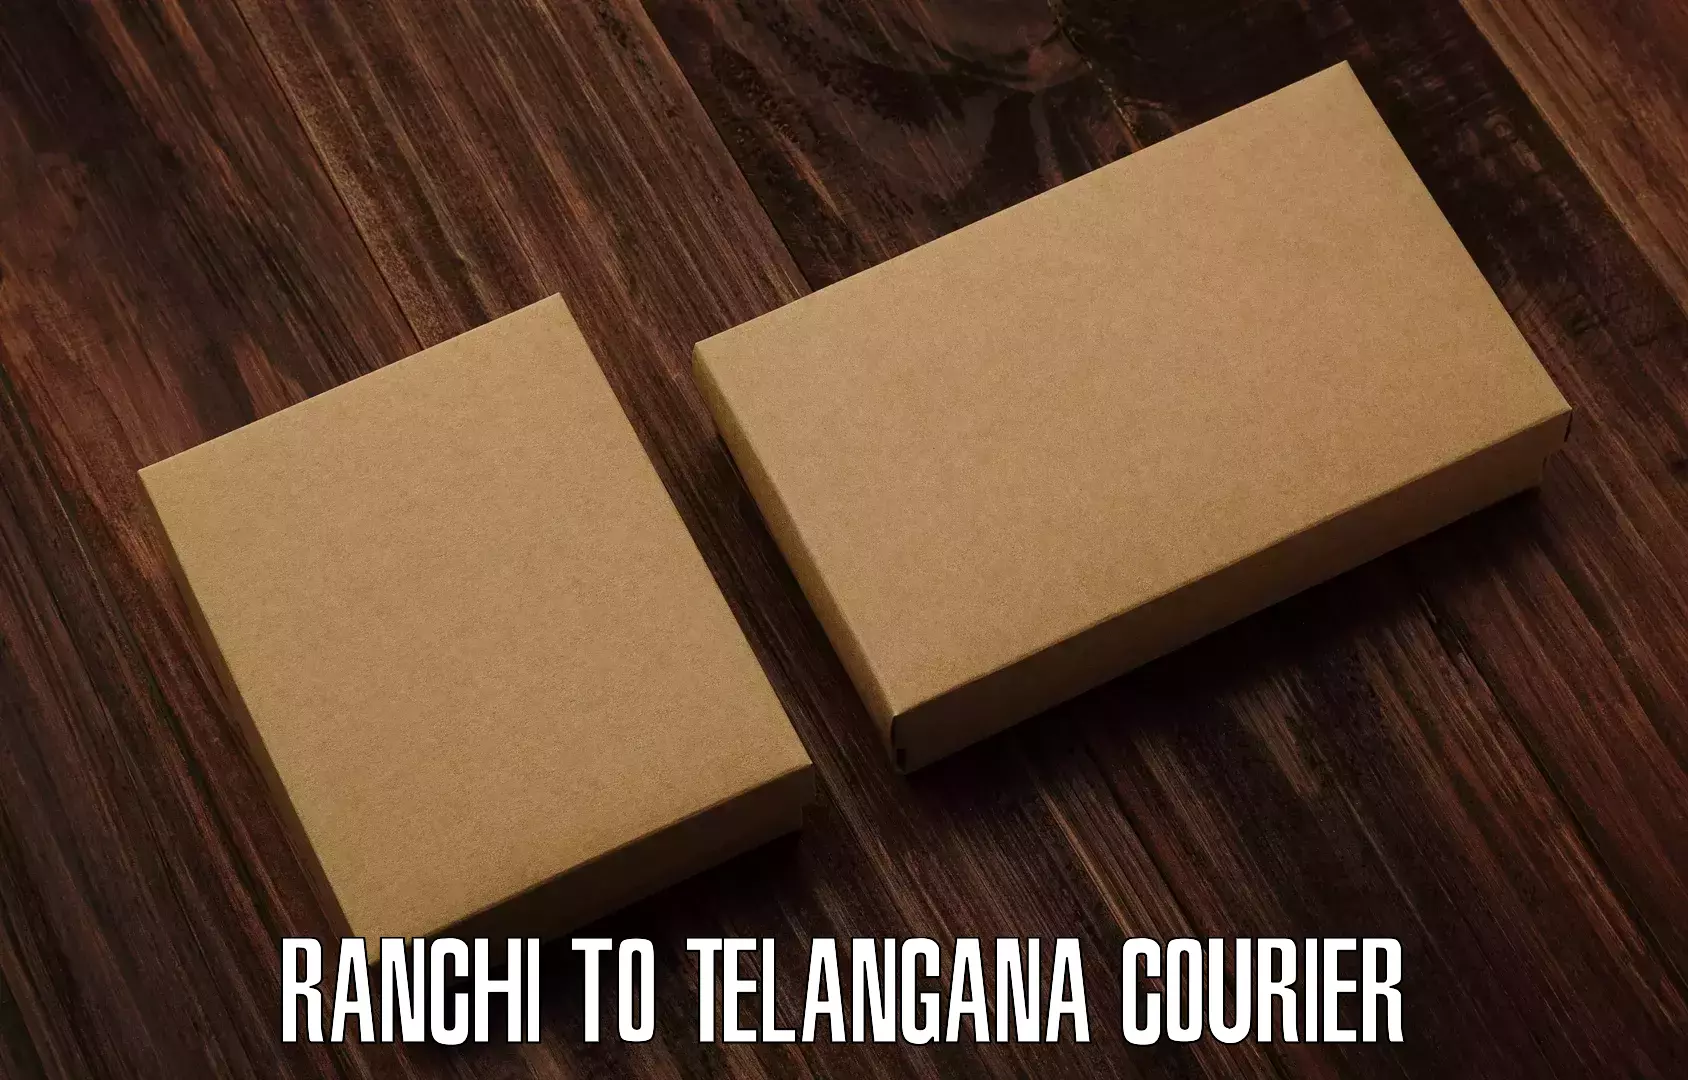 Courier service partnerships Ranchi to Sikanderguda